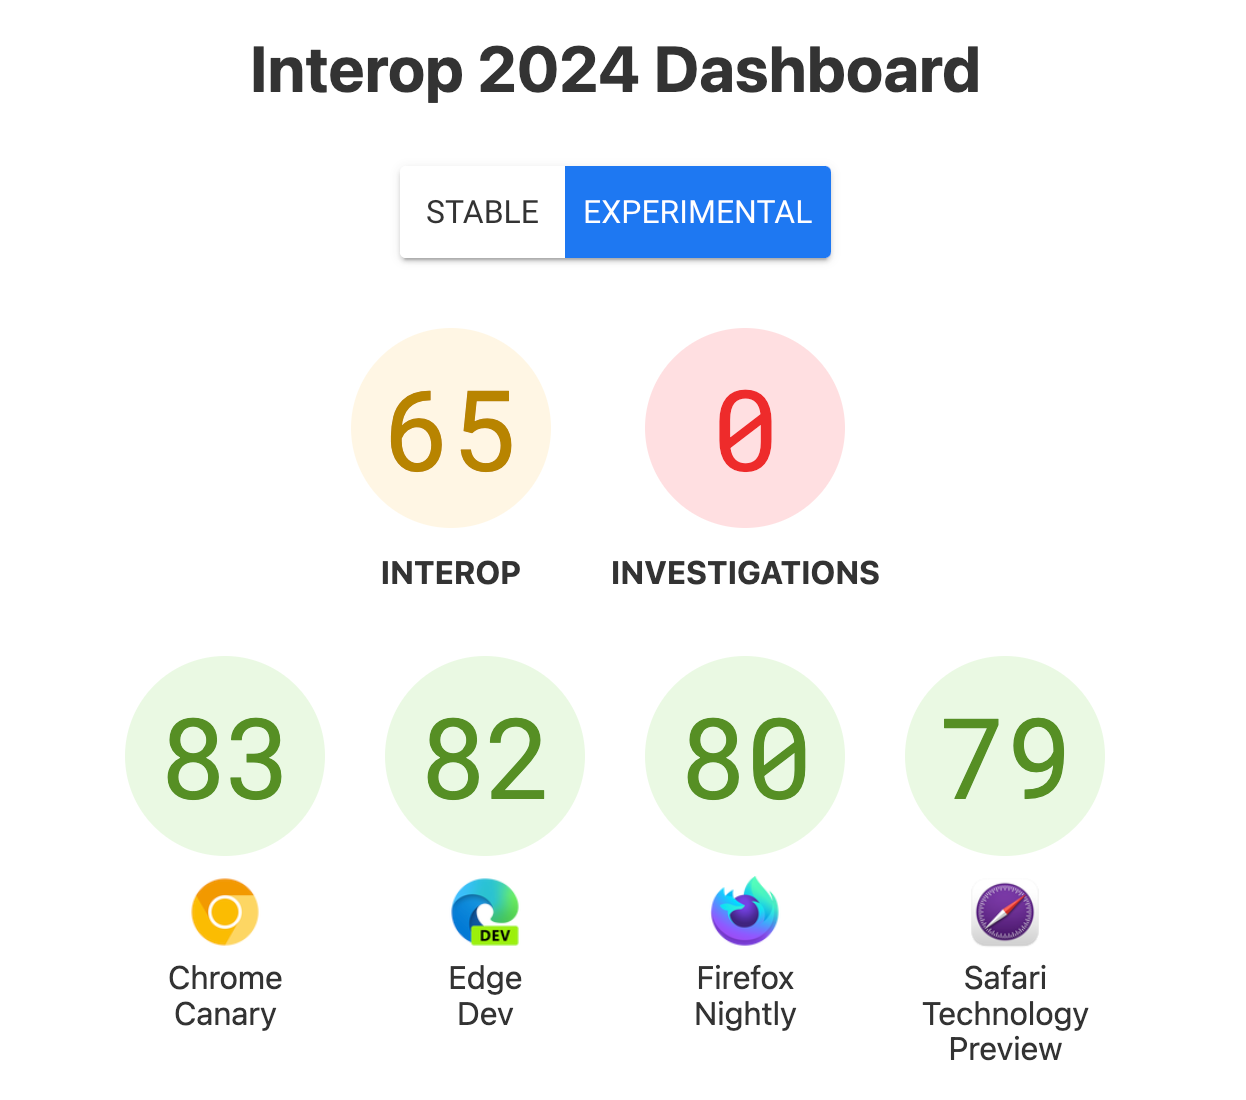 Captura de pantalla del panel con puntuaciones - Interoperabilidad: 65, Investigaciones: 0, Chrome Canary: 83, Edge Dev: 82, Firefox cada noche: 80, Safari Technology Preview: 79.